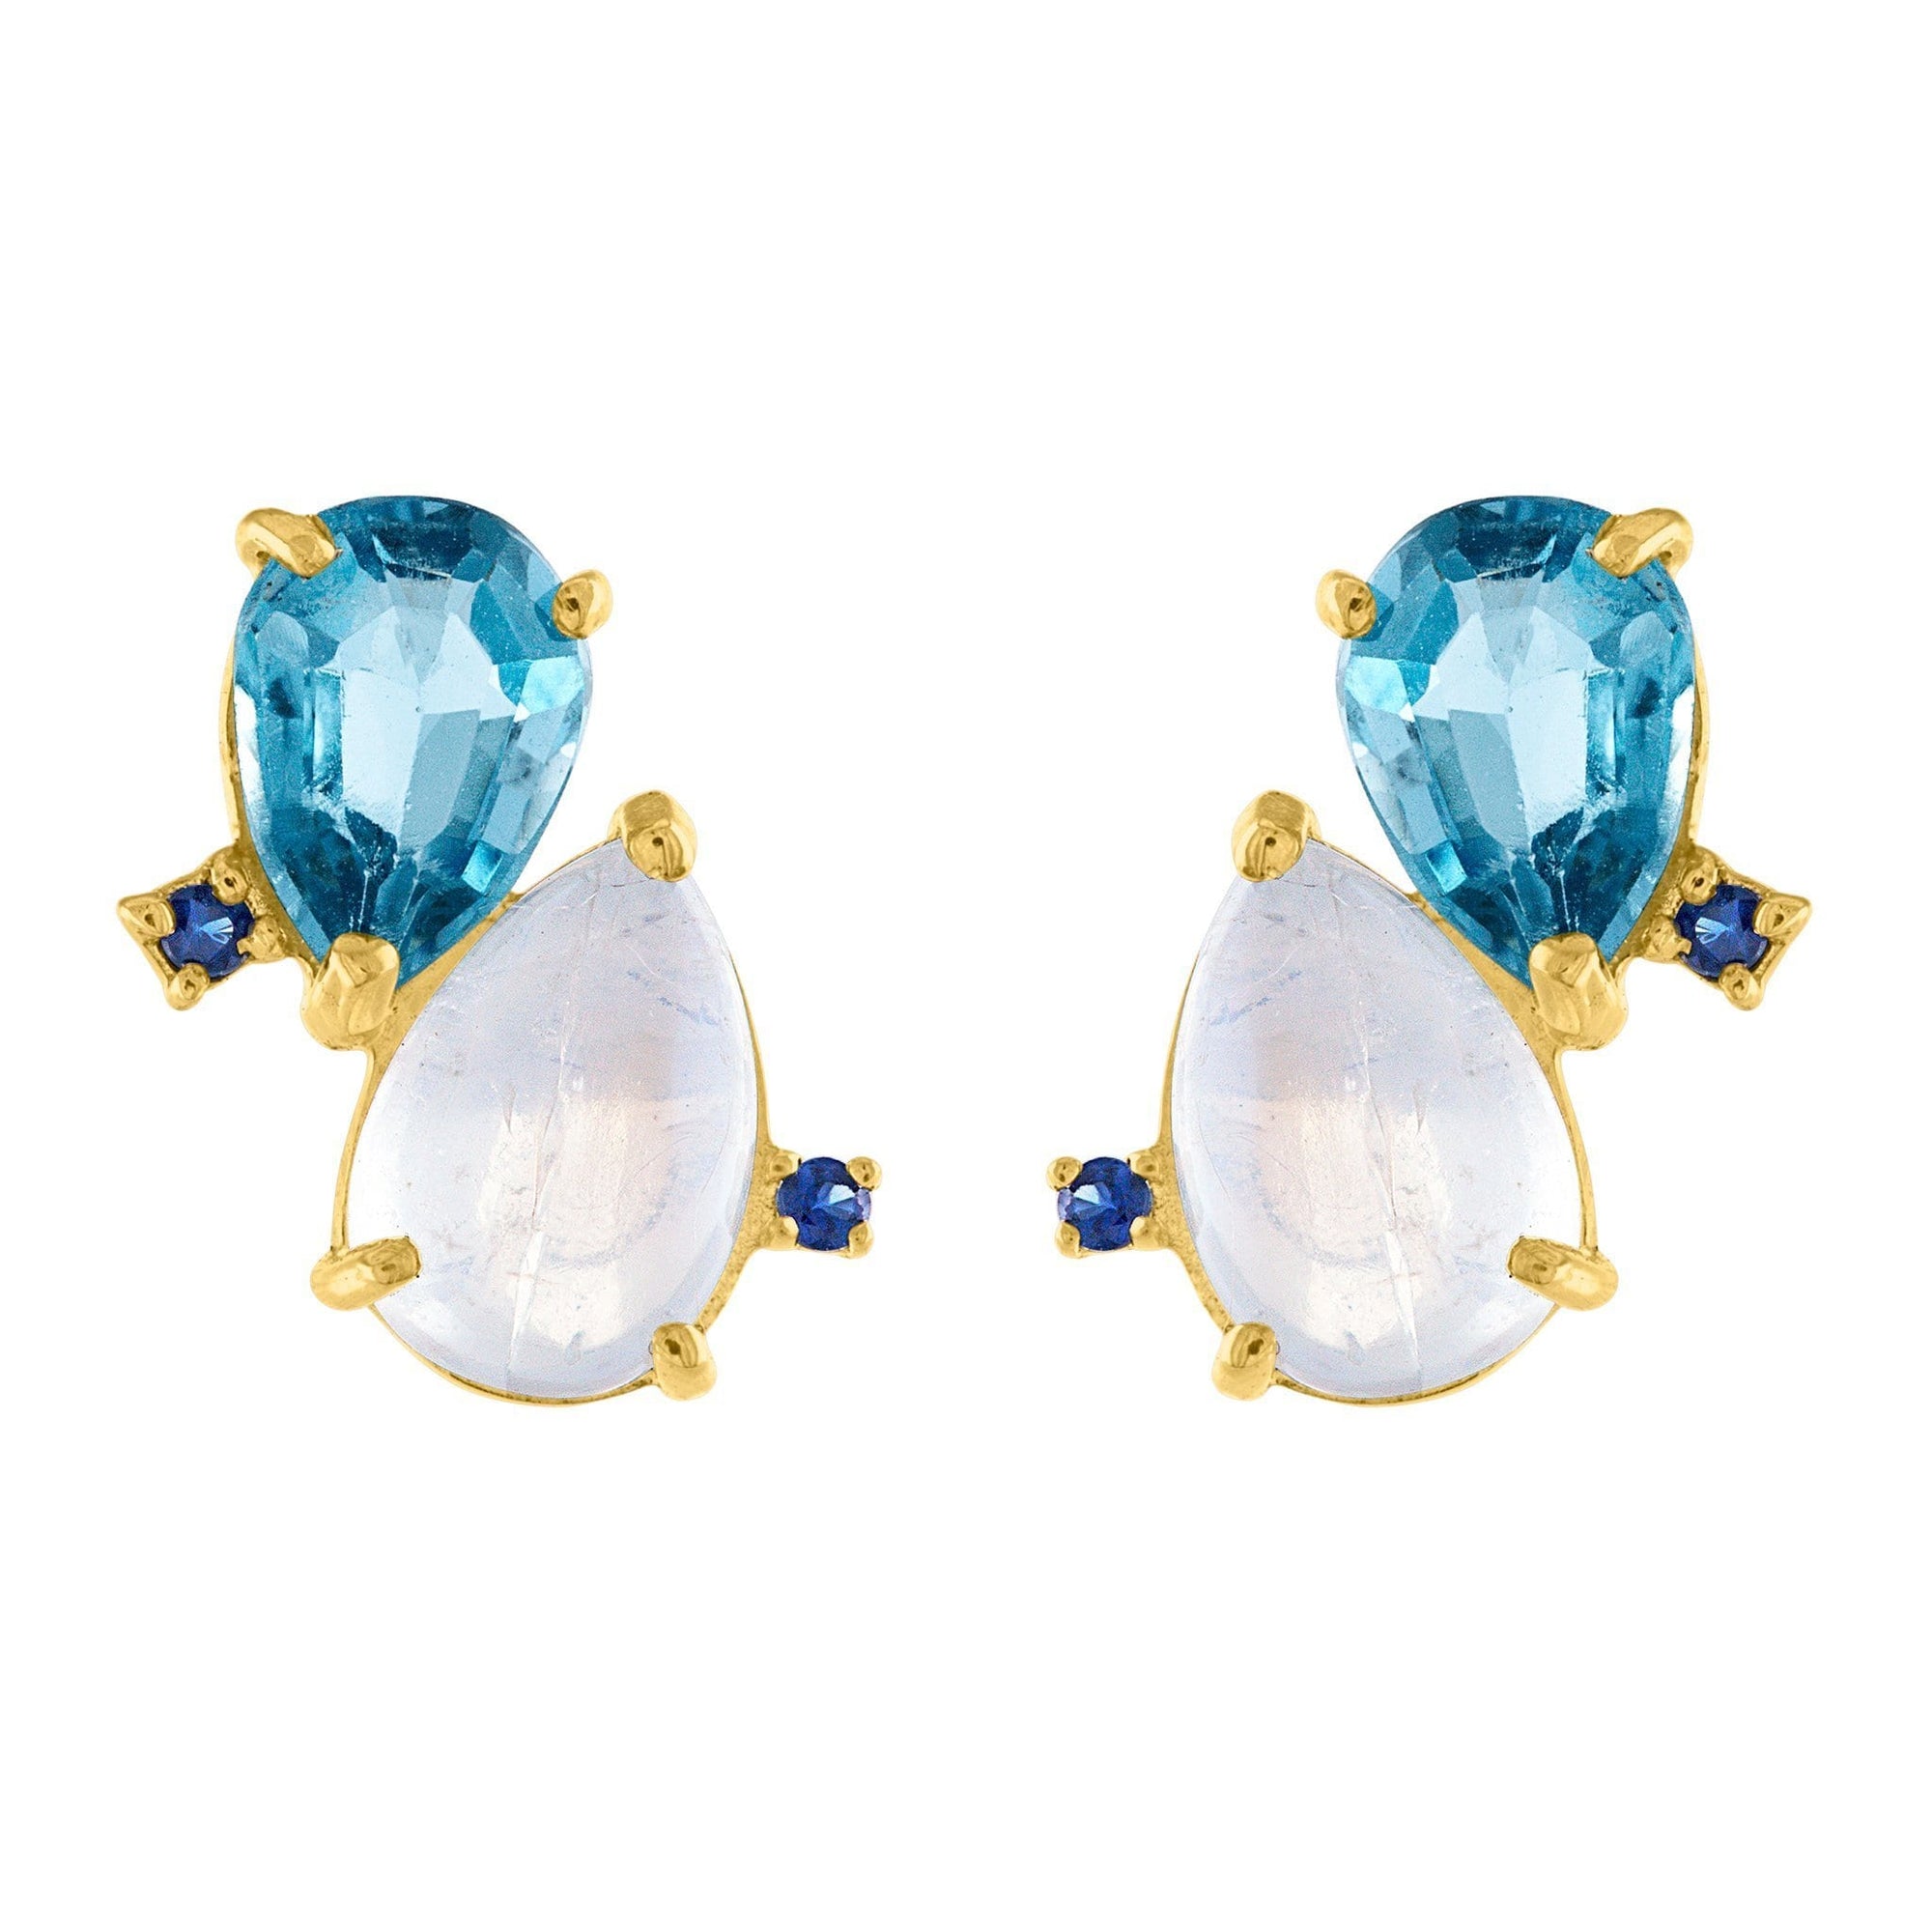 Coud Stud Earrings: 14k Gold, Moonstone, London Blue Topaz, Blue Sapphire